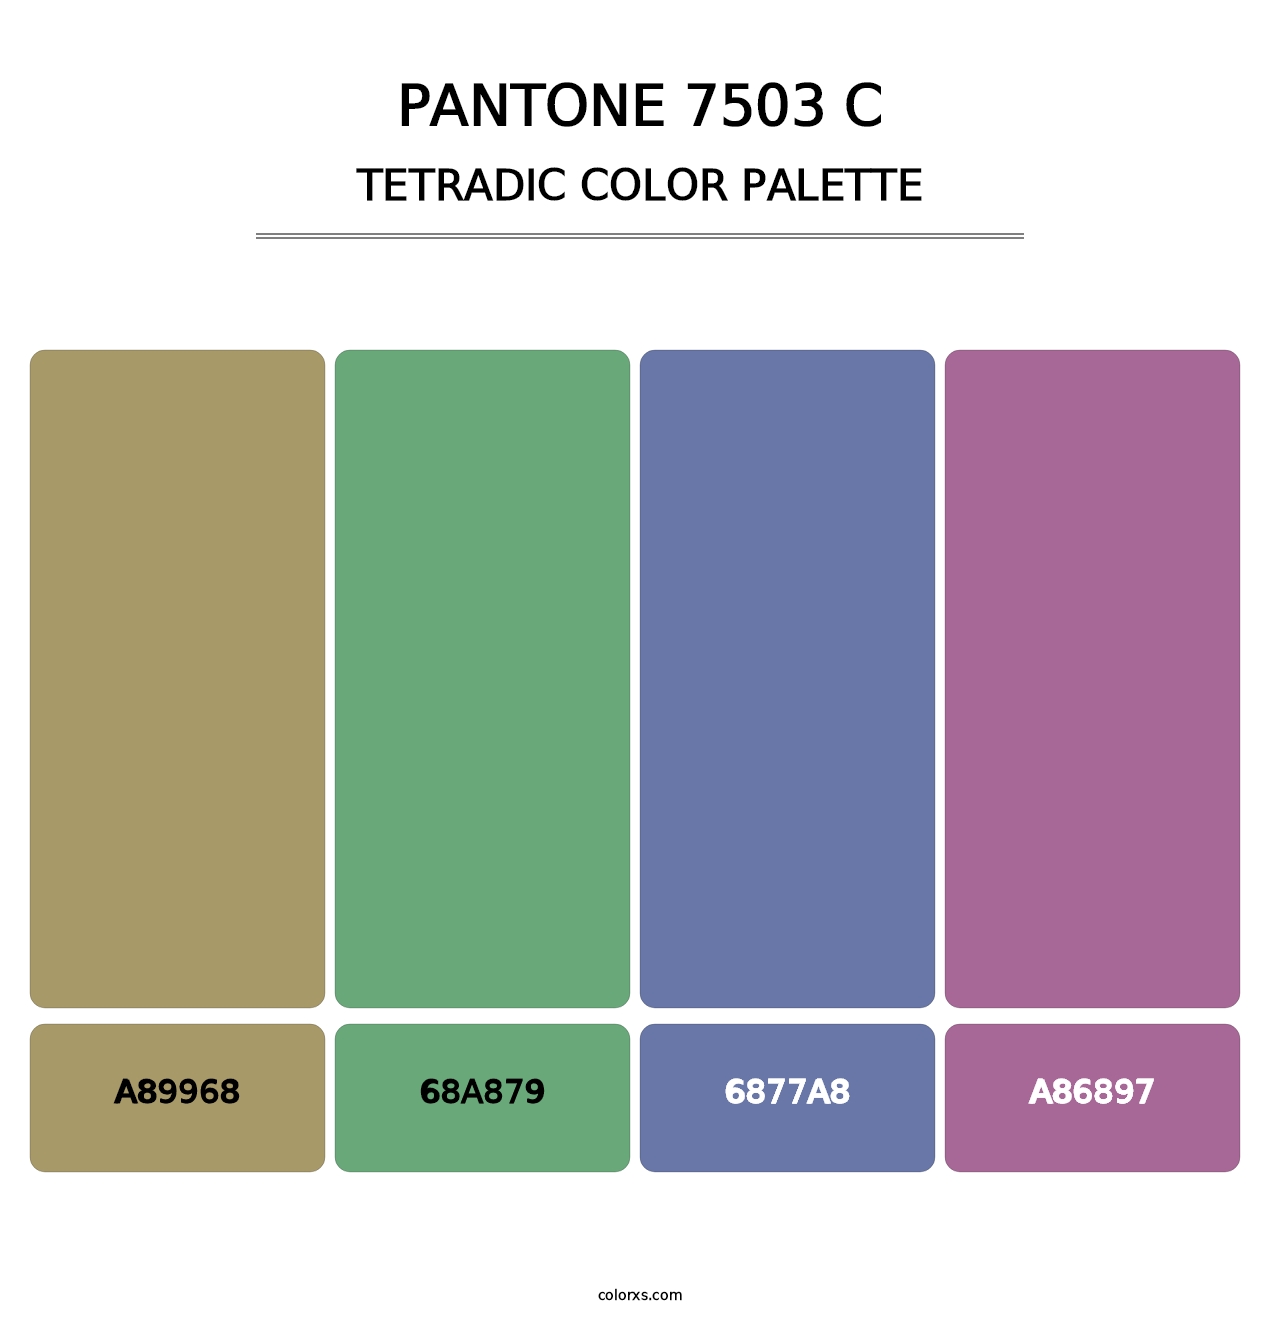 PANTONE 7503 C - Tetradic Color Palette